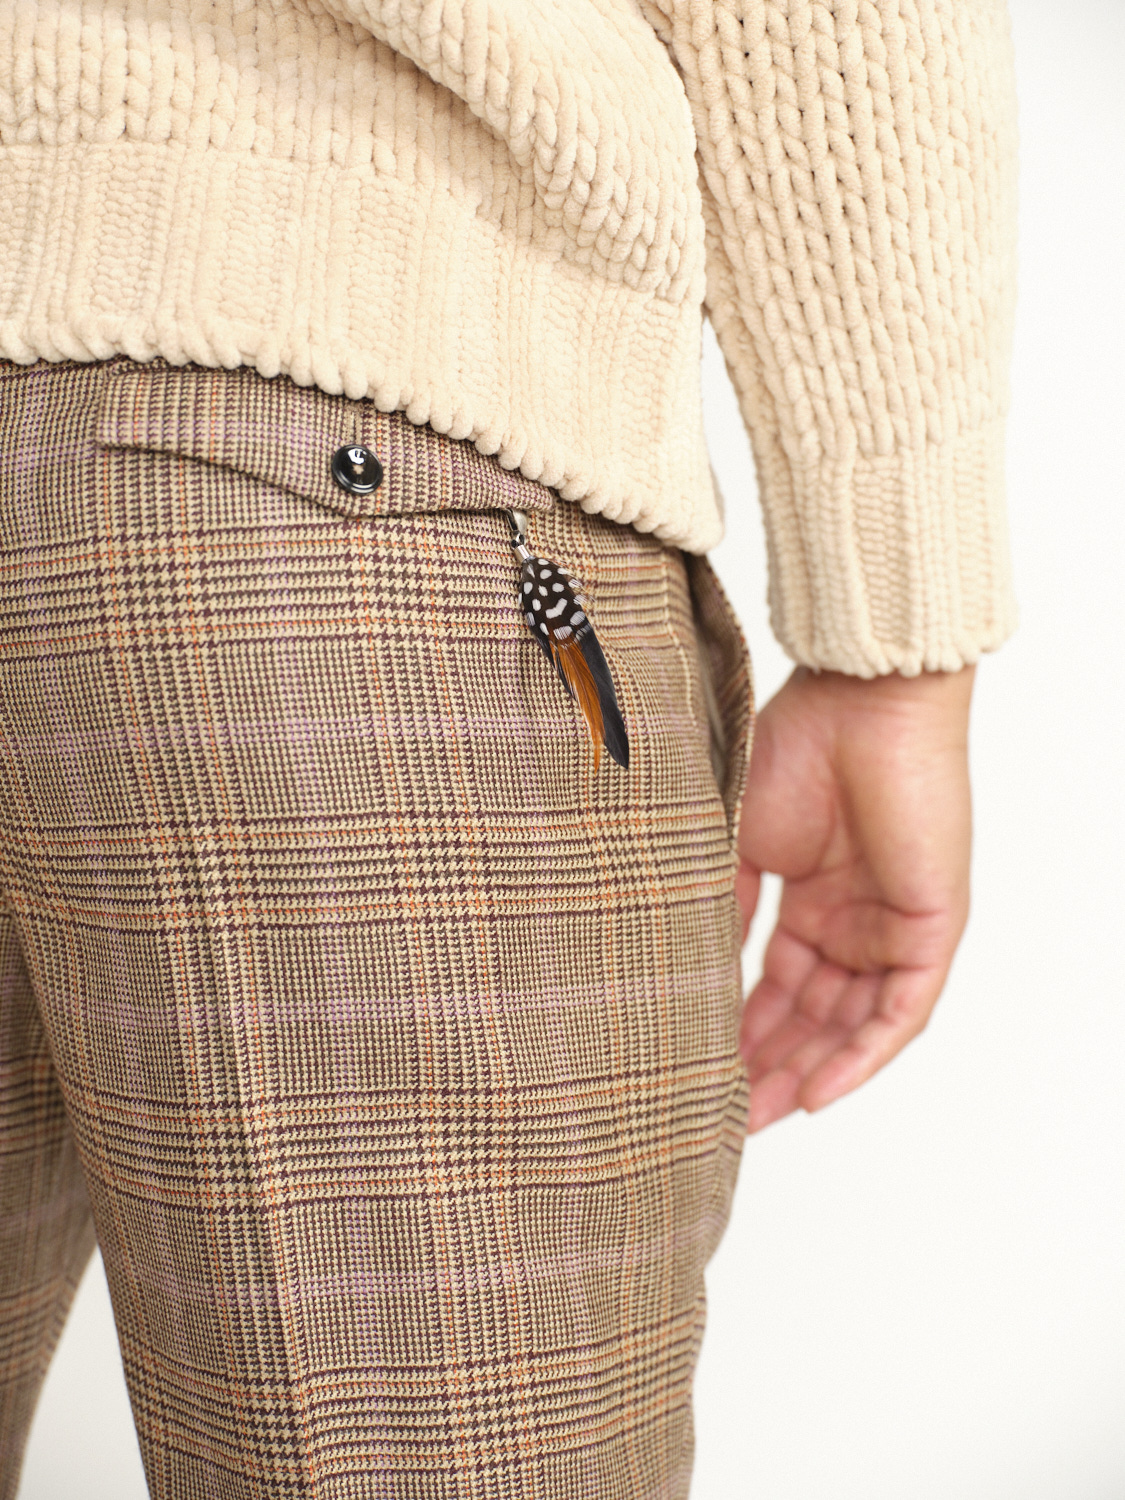 PT Torino Rebel - Pantalon de costume à carreaux et à plis braun 48